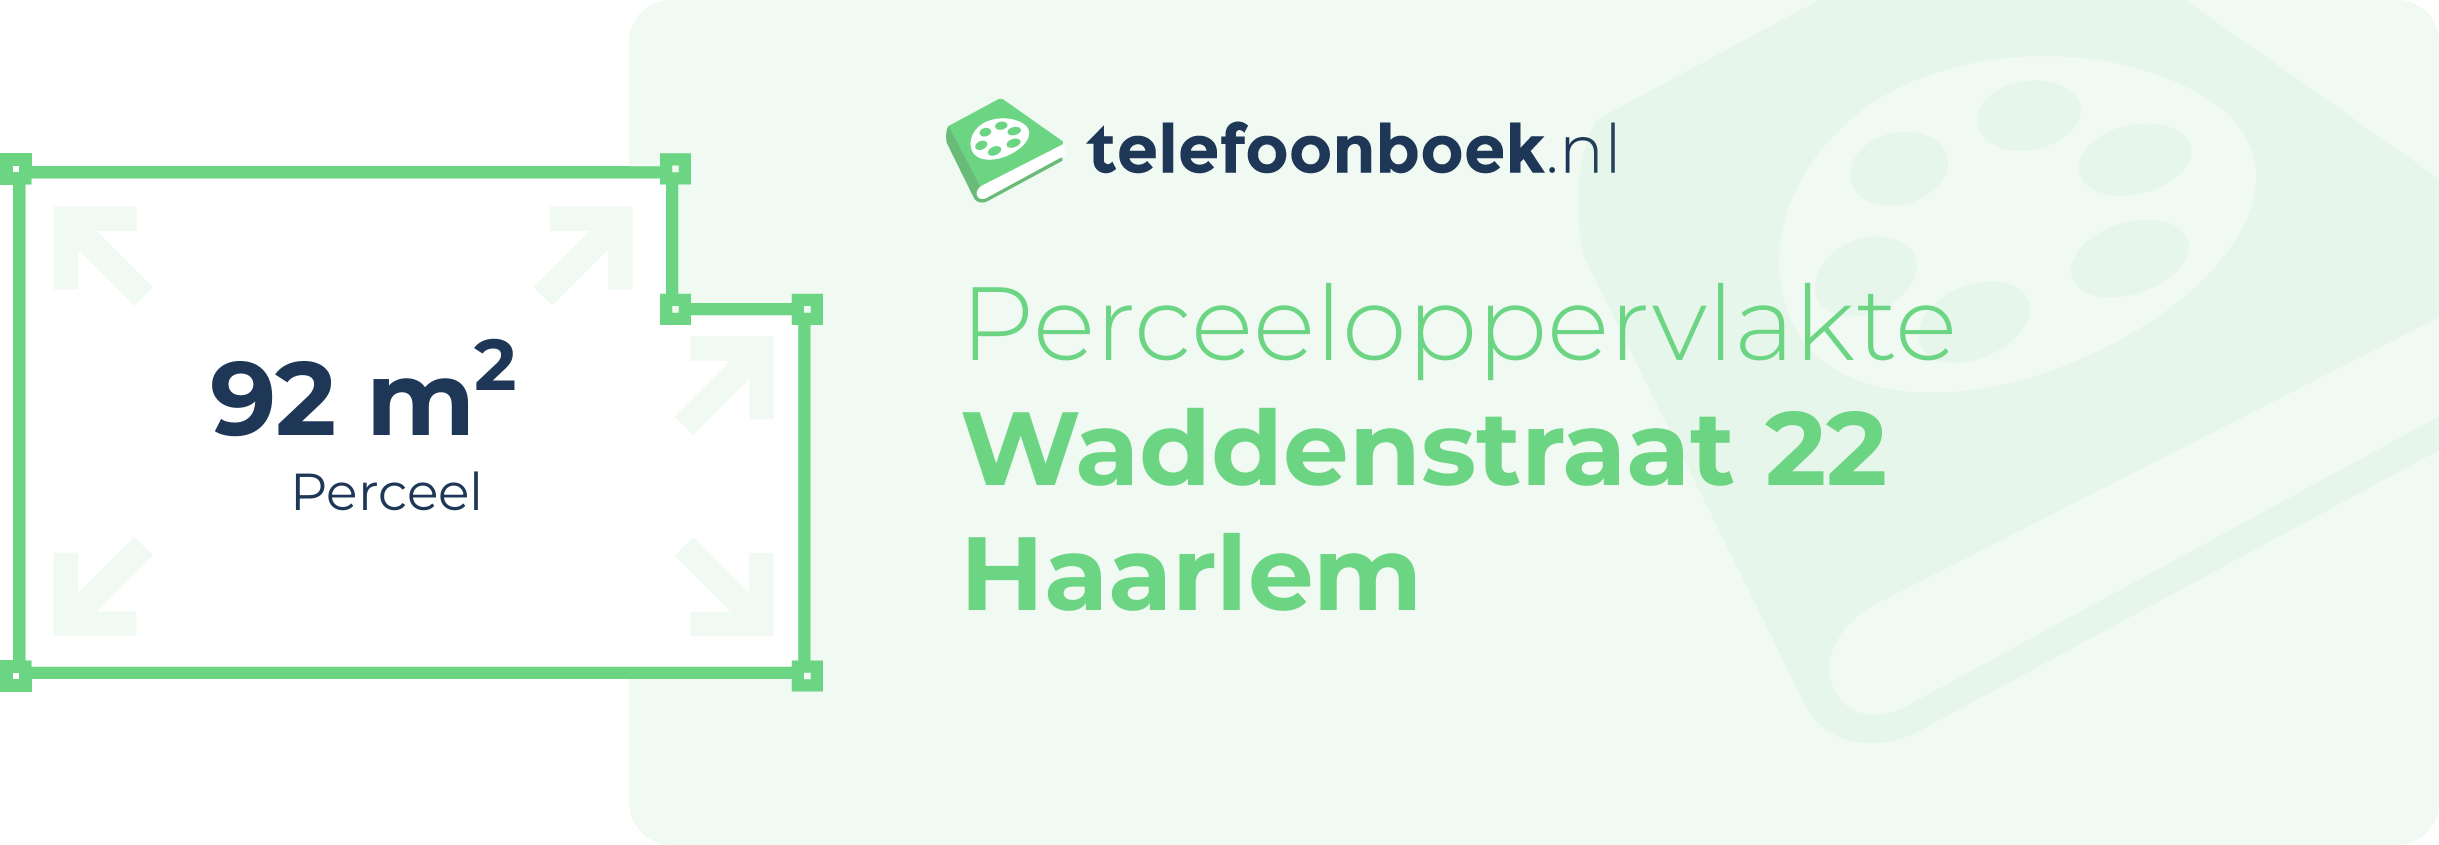 Perceeloppervlakte Waddenstraat 22 Haarlem